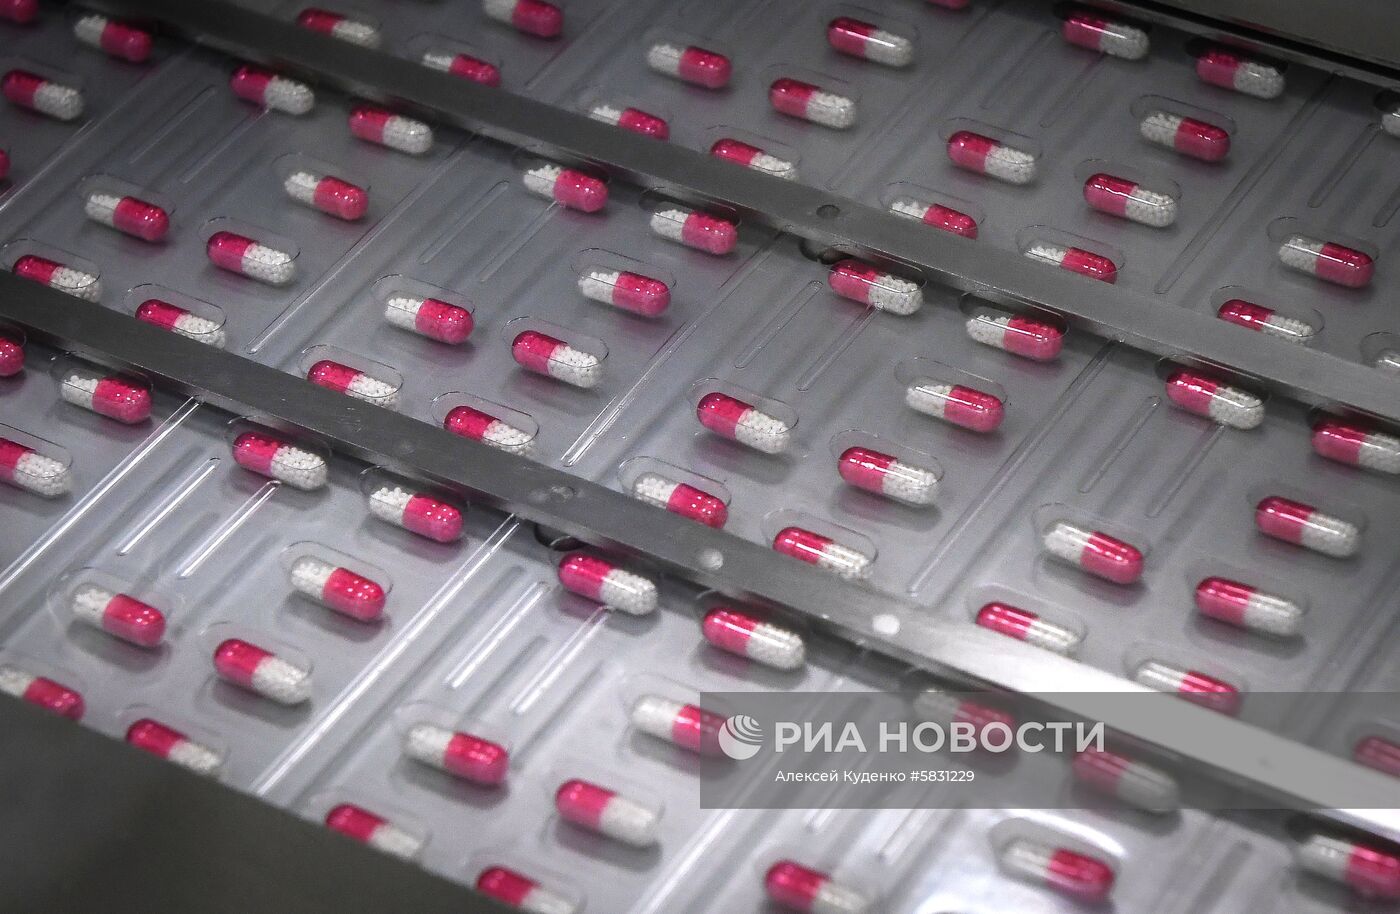 Производство лекарств на фармацевтическом предприятии "Оболенское"